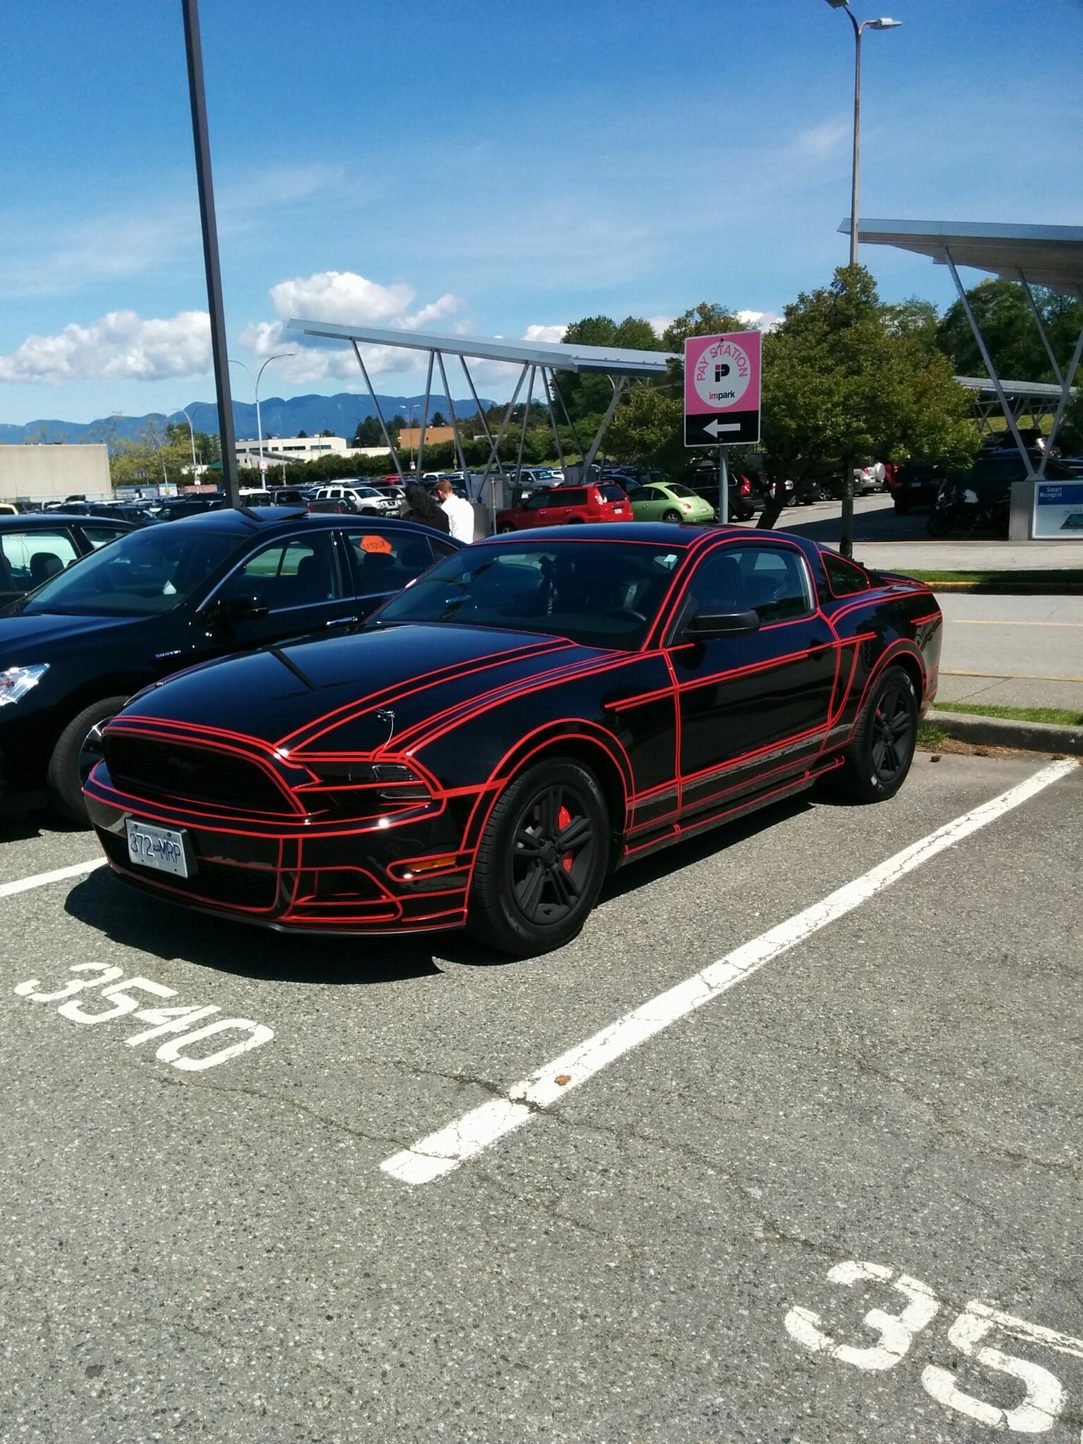 Tron Lamborghini meet Tron Mustang - meme